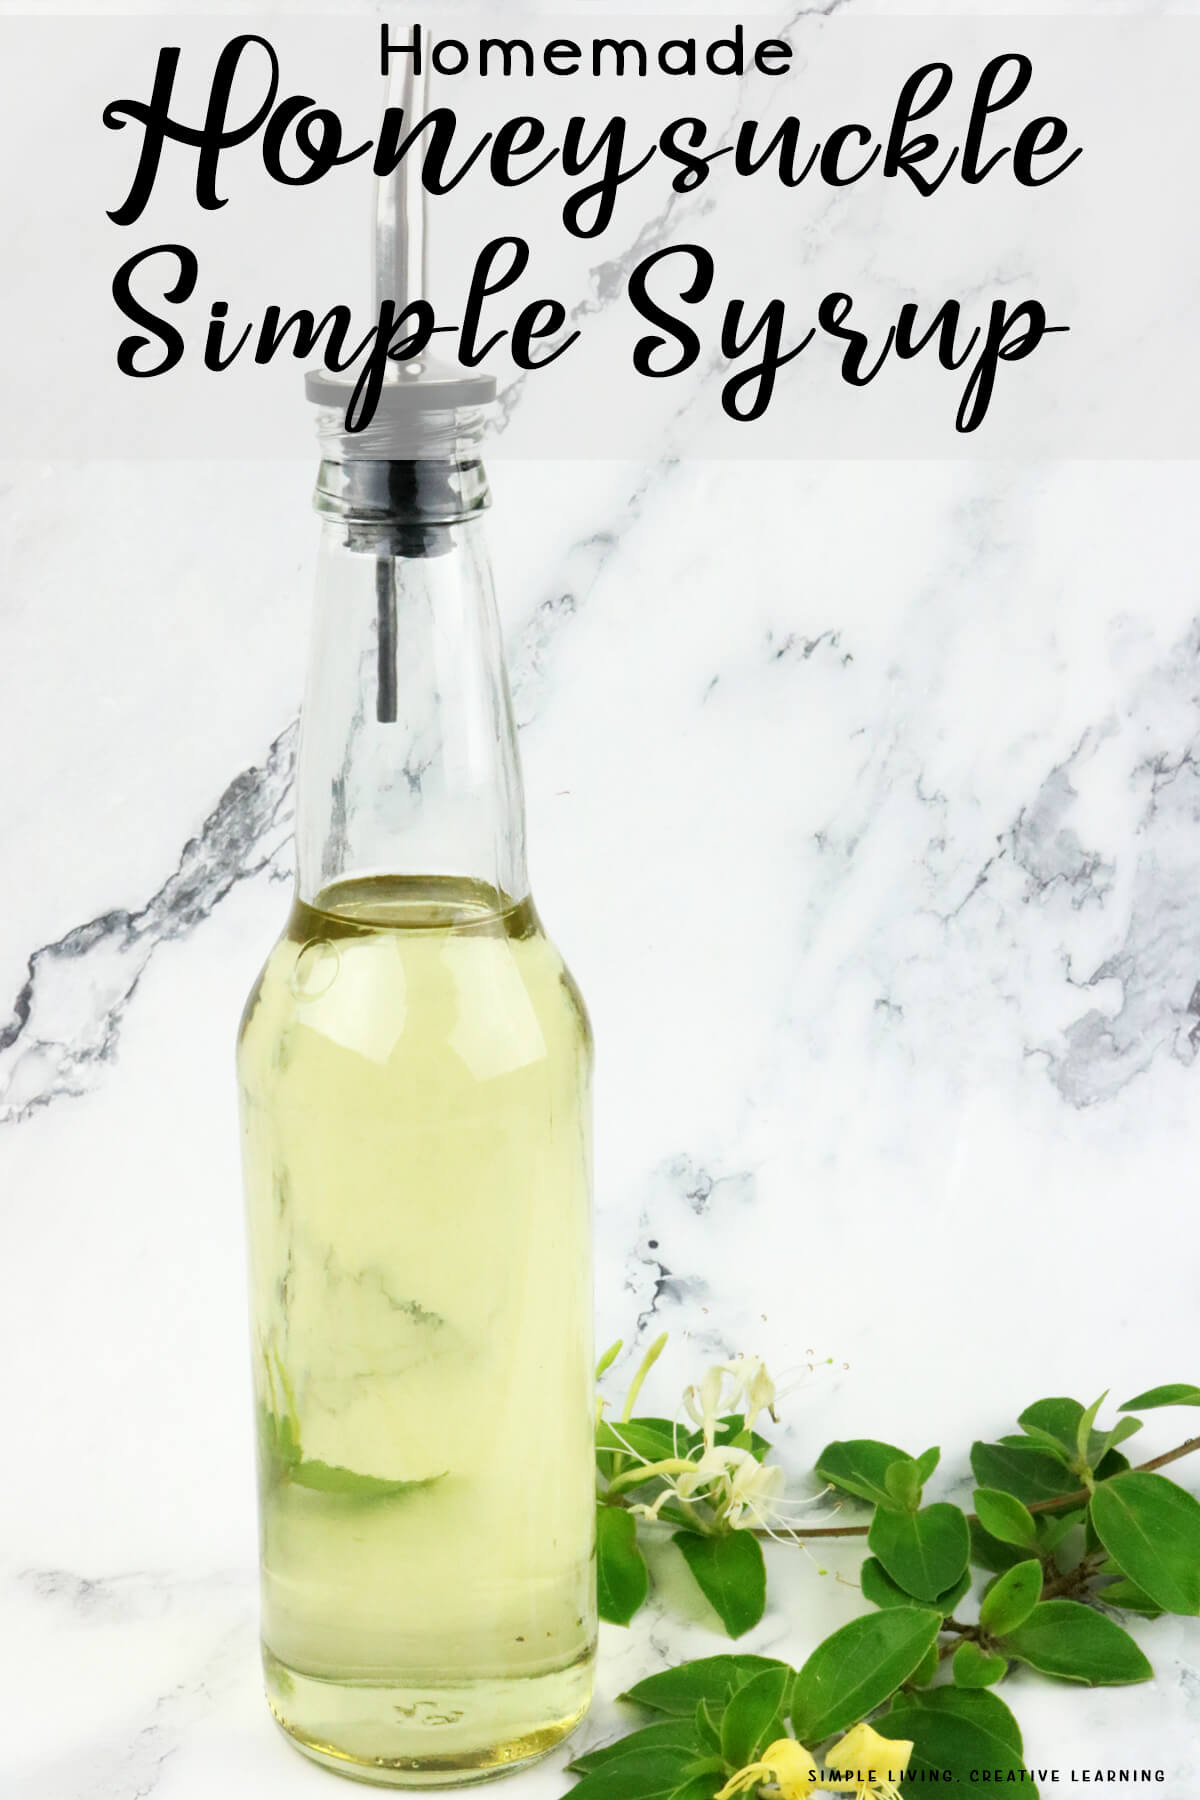 Honeysuckle Simple Syrup